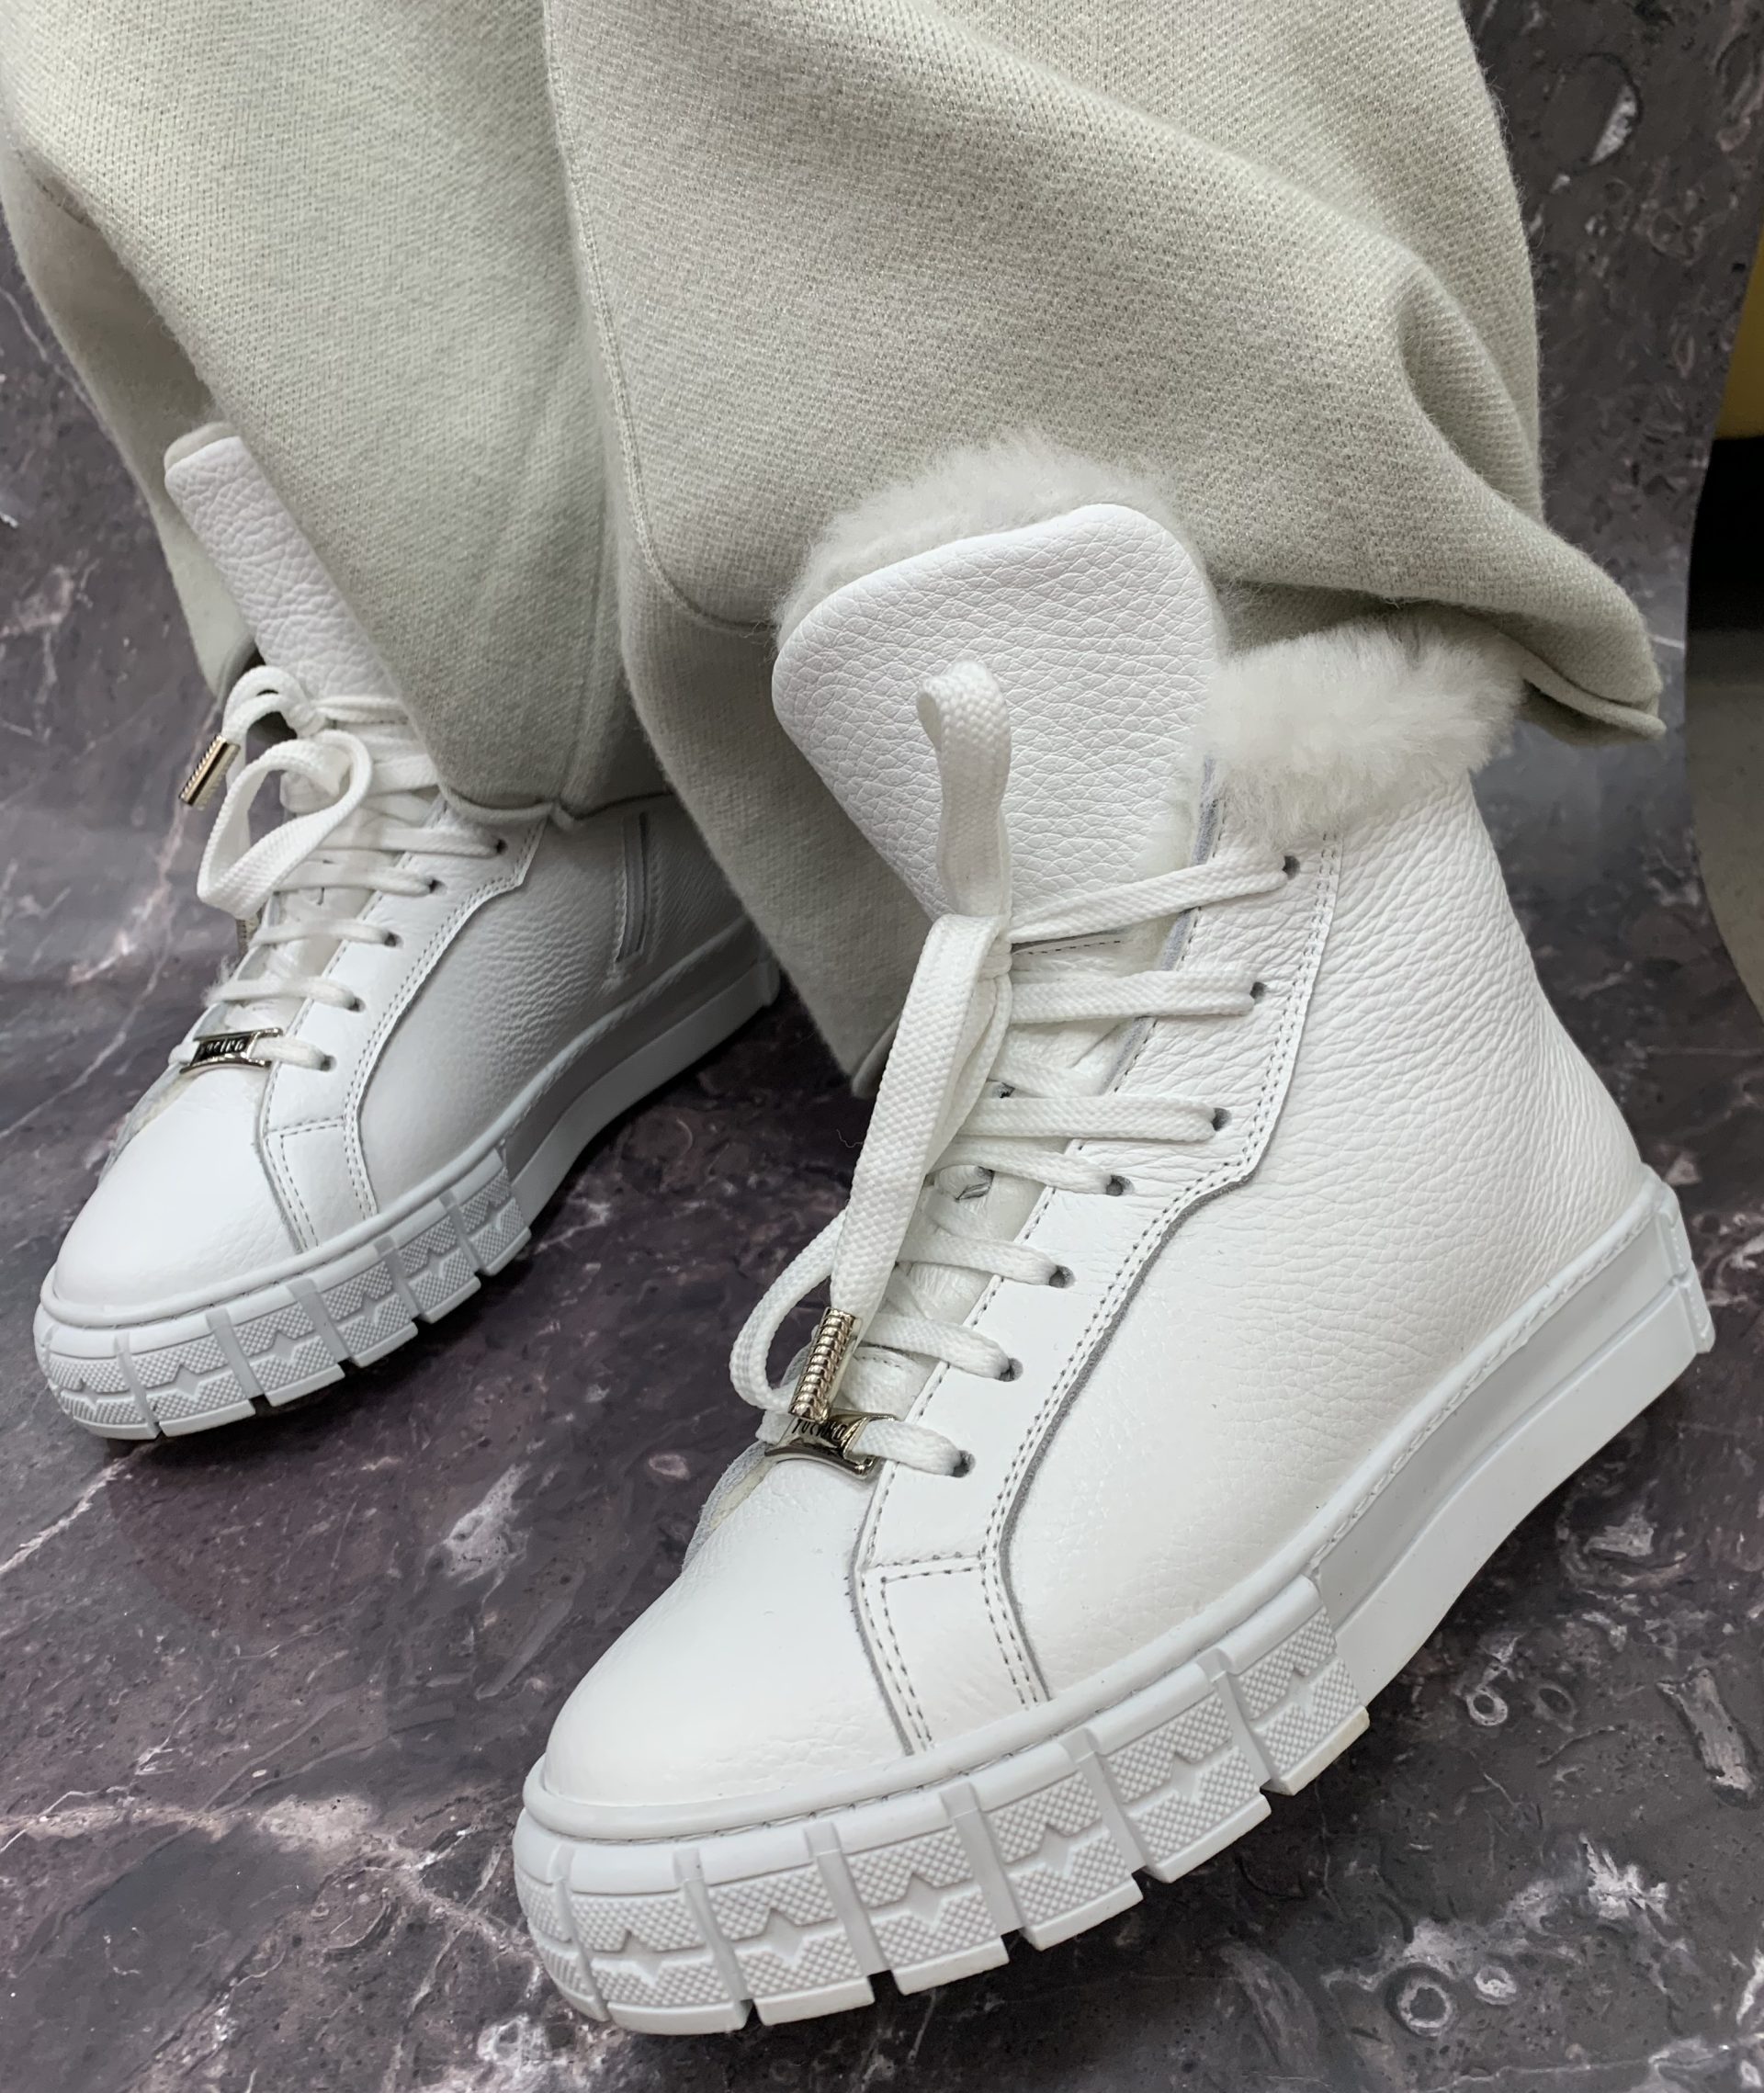 Ботинки женские ТУКИНО зима белые - Интернет магазин обуви